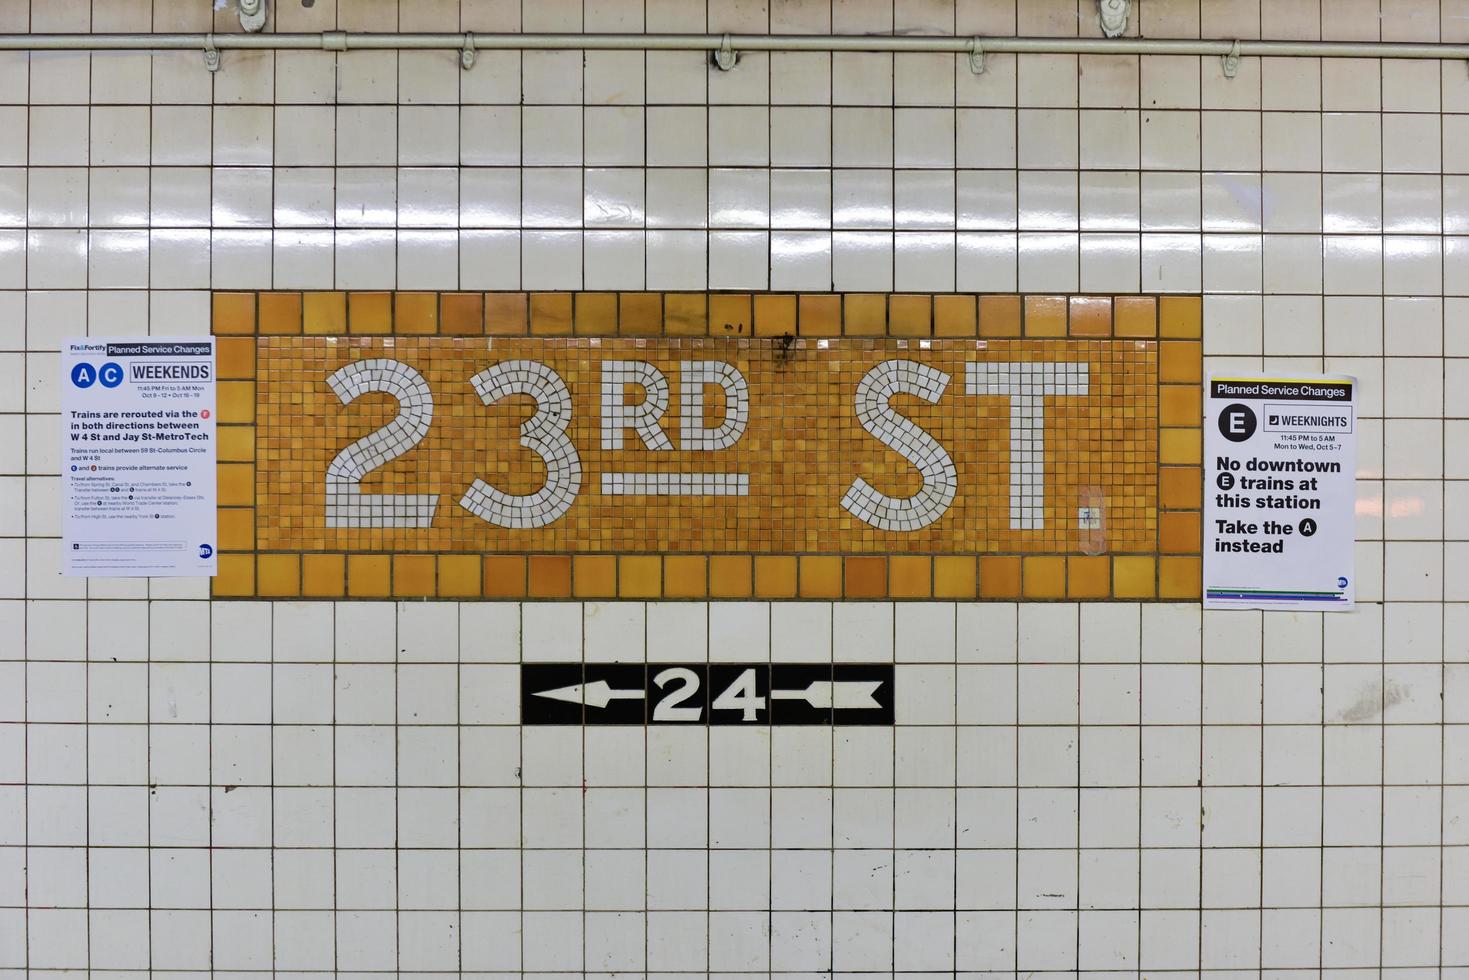 34th Street Penn Station Subway Stop - NYC photo